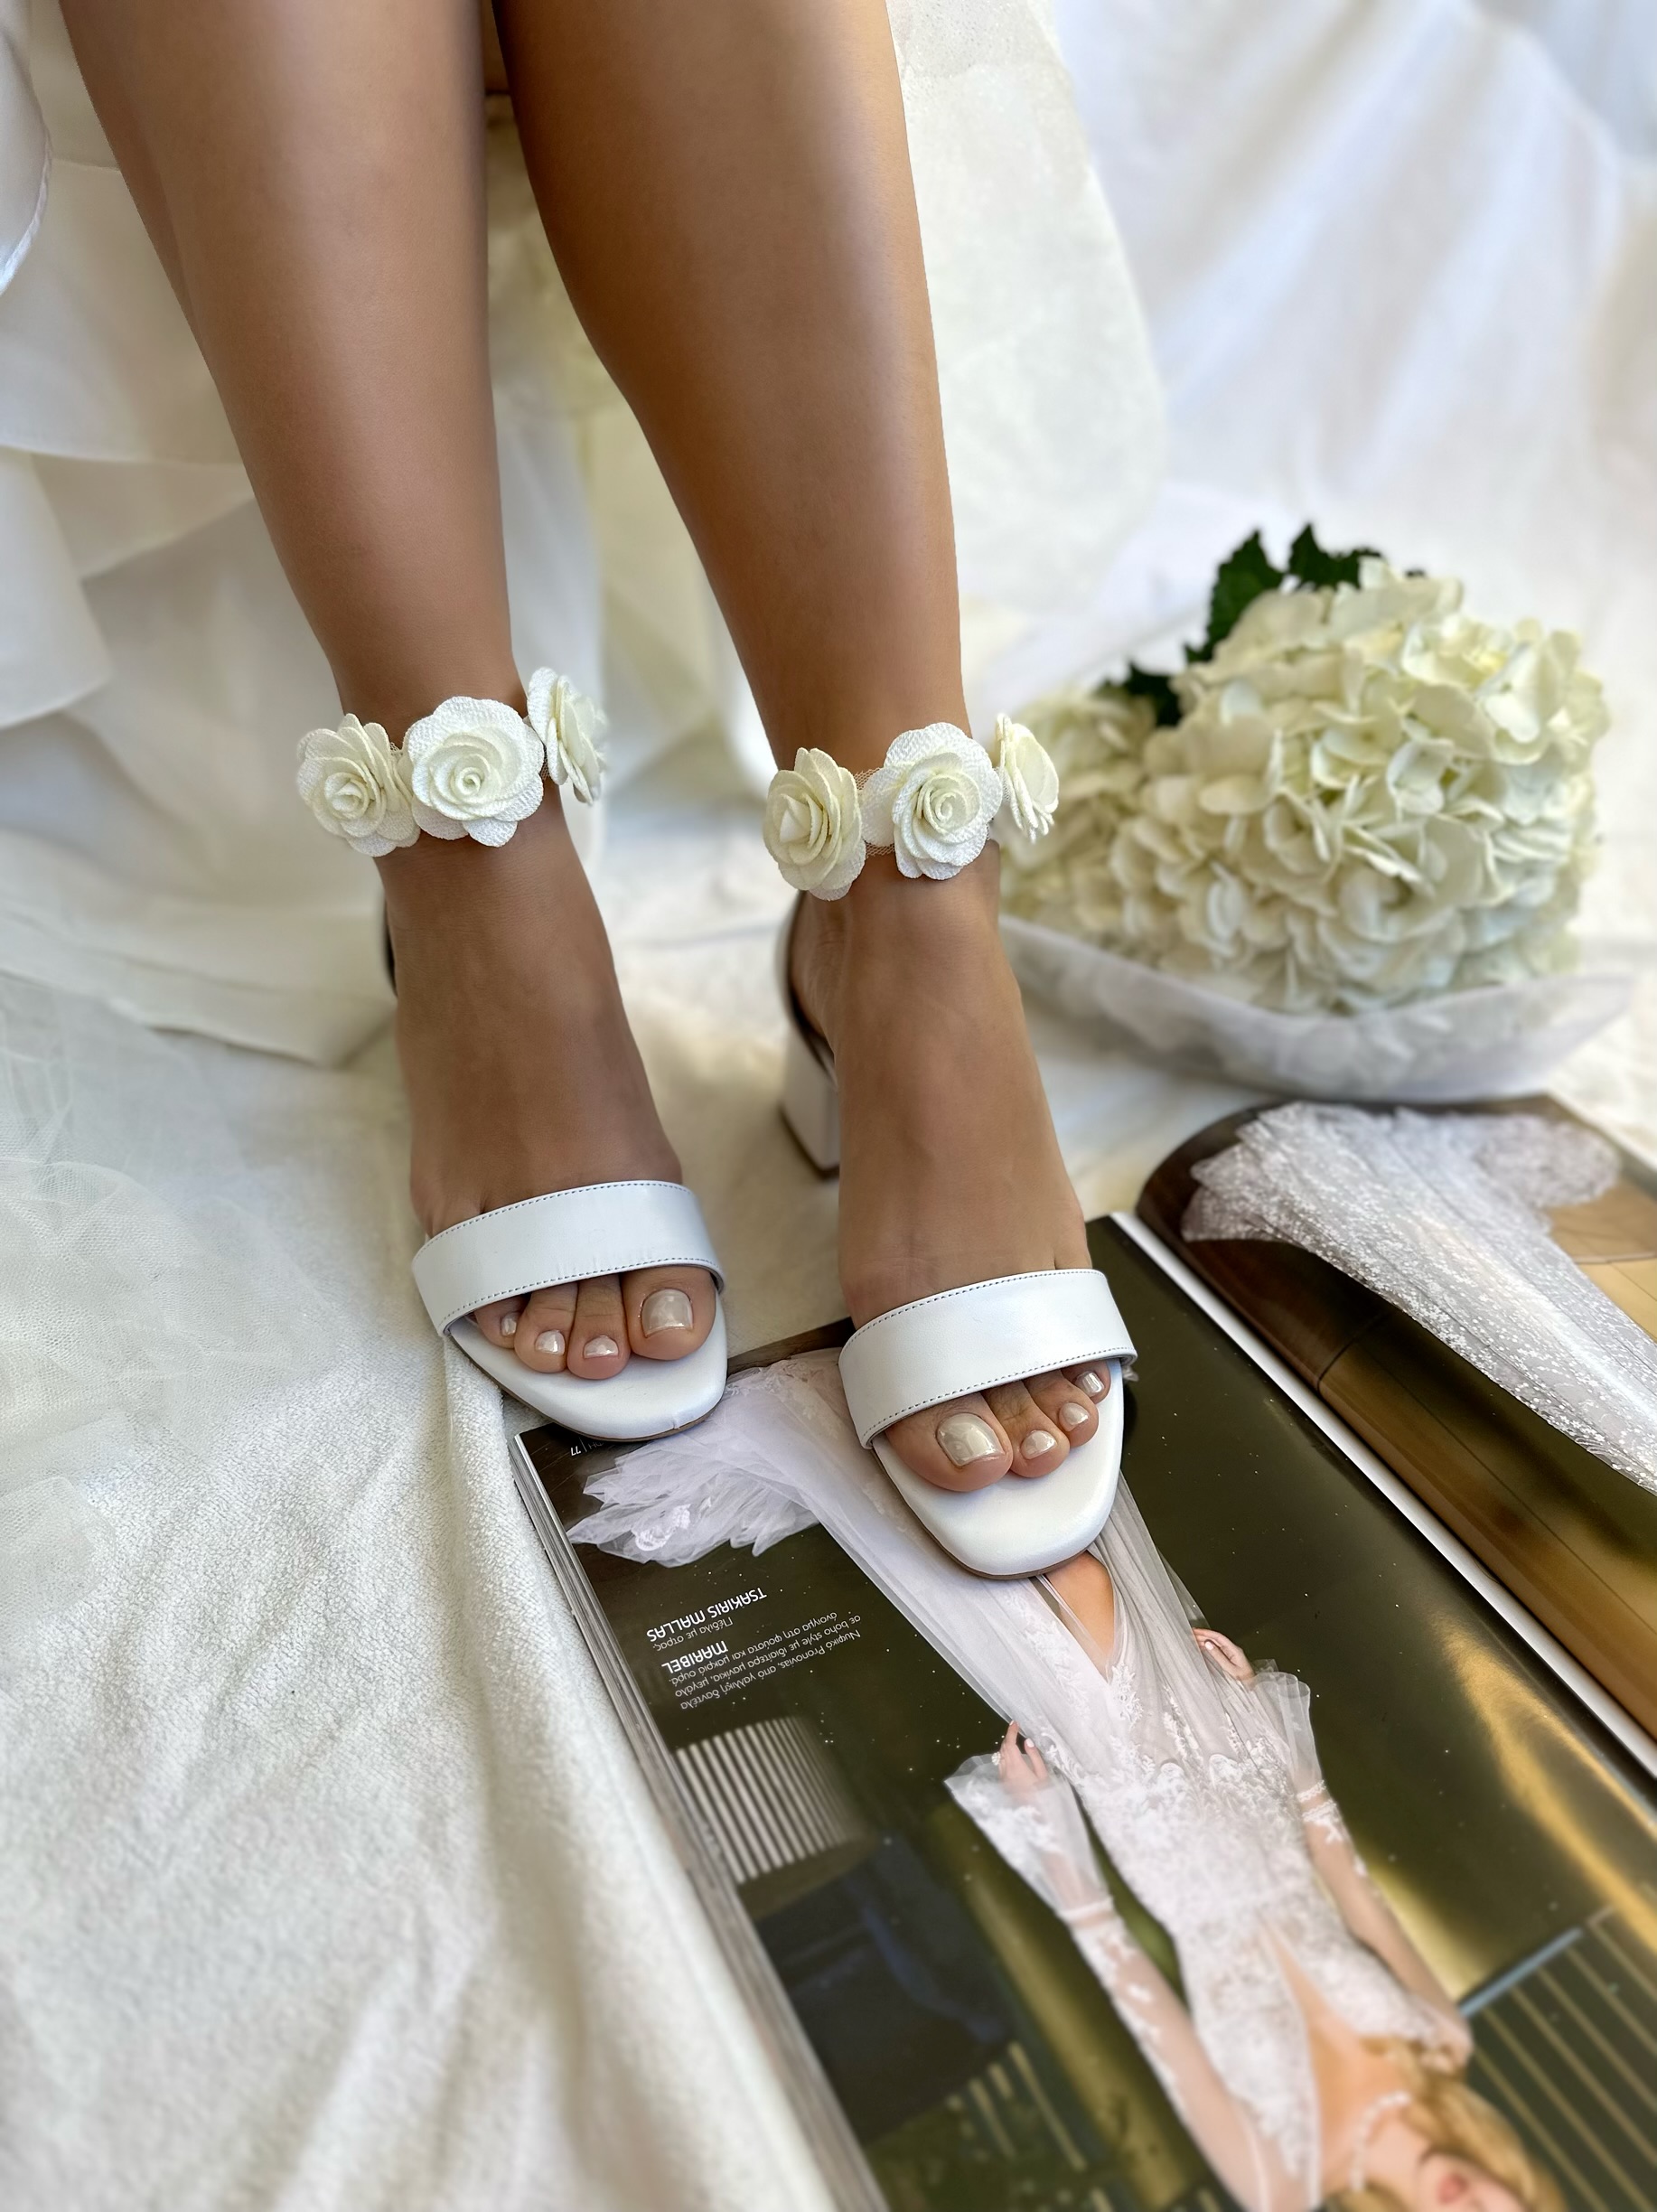 Harlo Shoes Daniela Satin Pointed Toe Stiletto With Crystal Ankle Bracelet  - White Ivory - Marrime